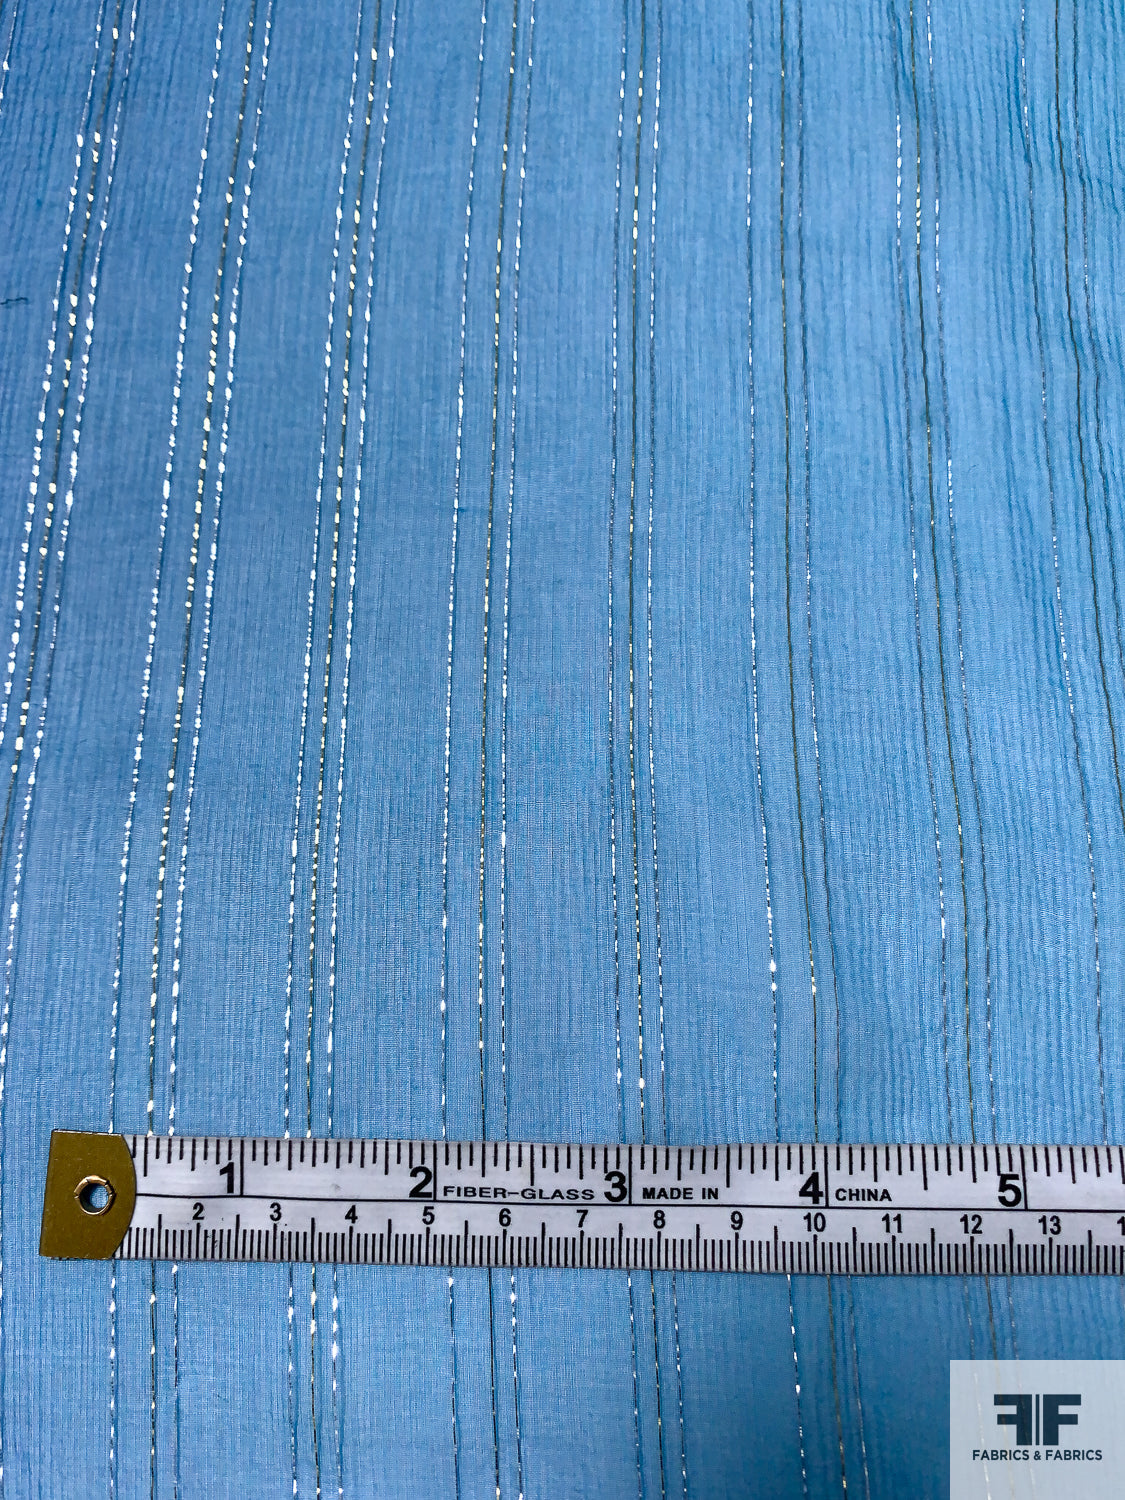 Lurex Pinstriped Ombré Printed Silk Chiffon - Blue / Silver / Gold